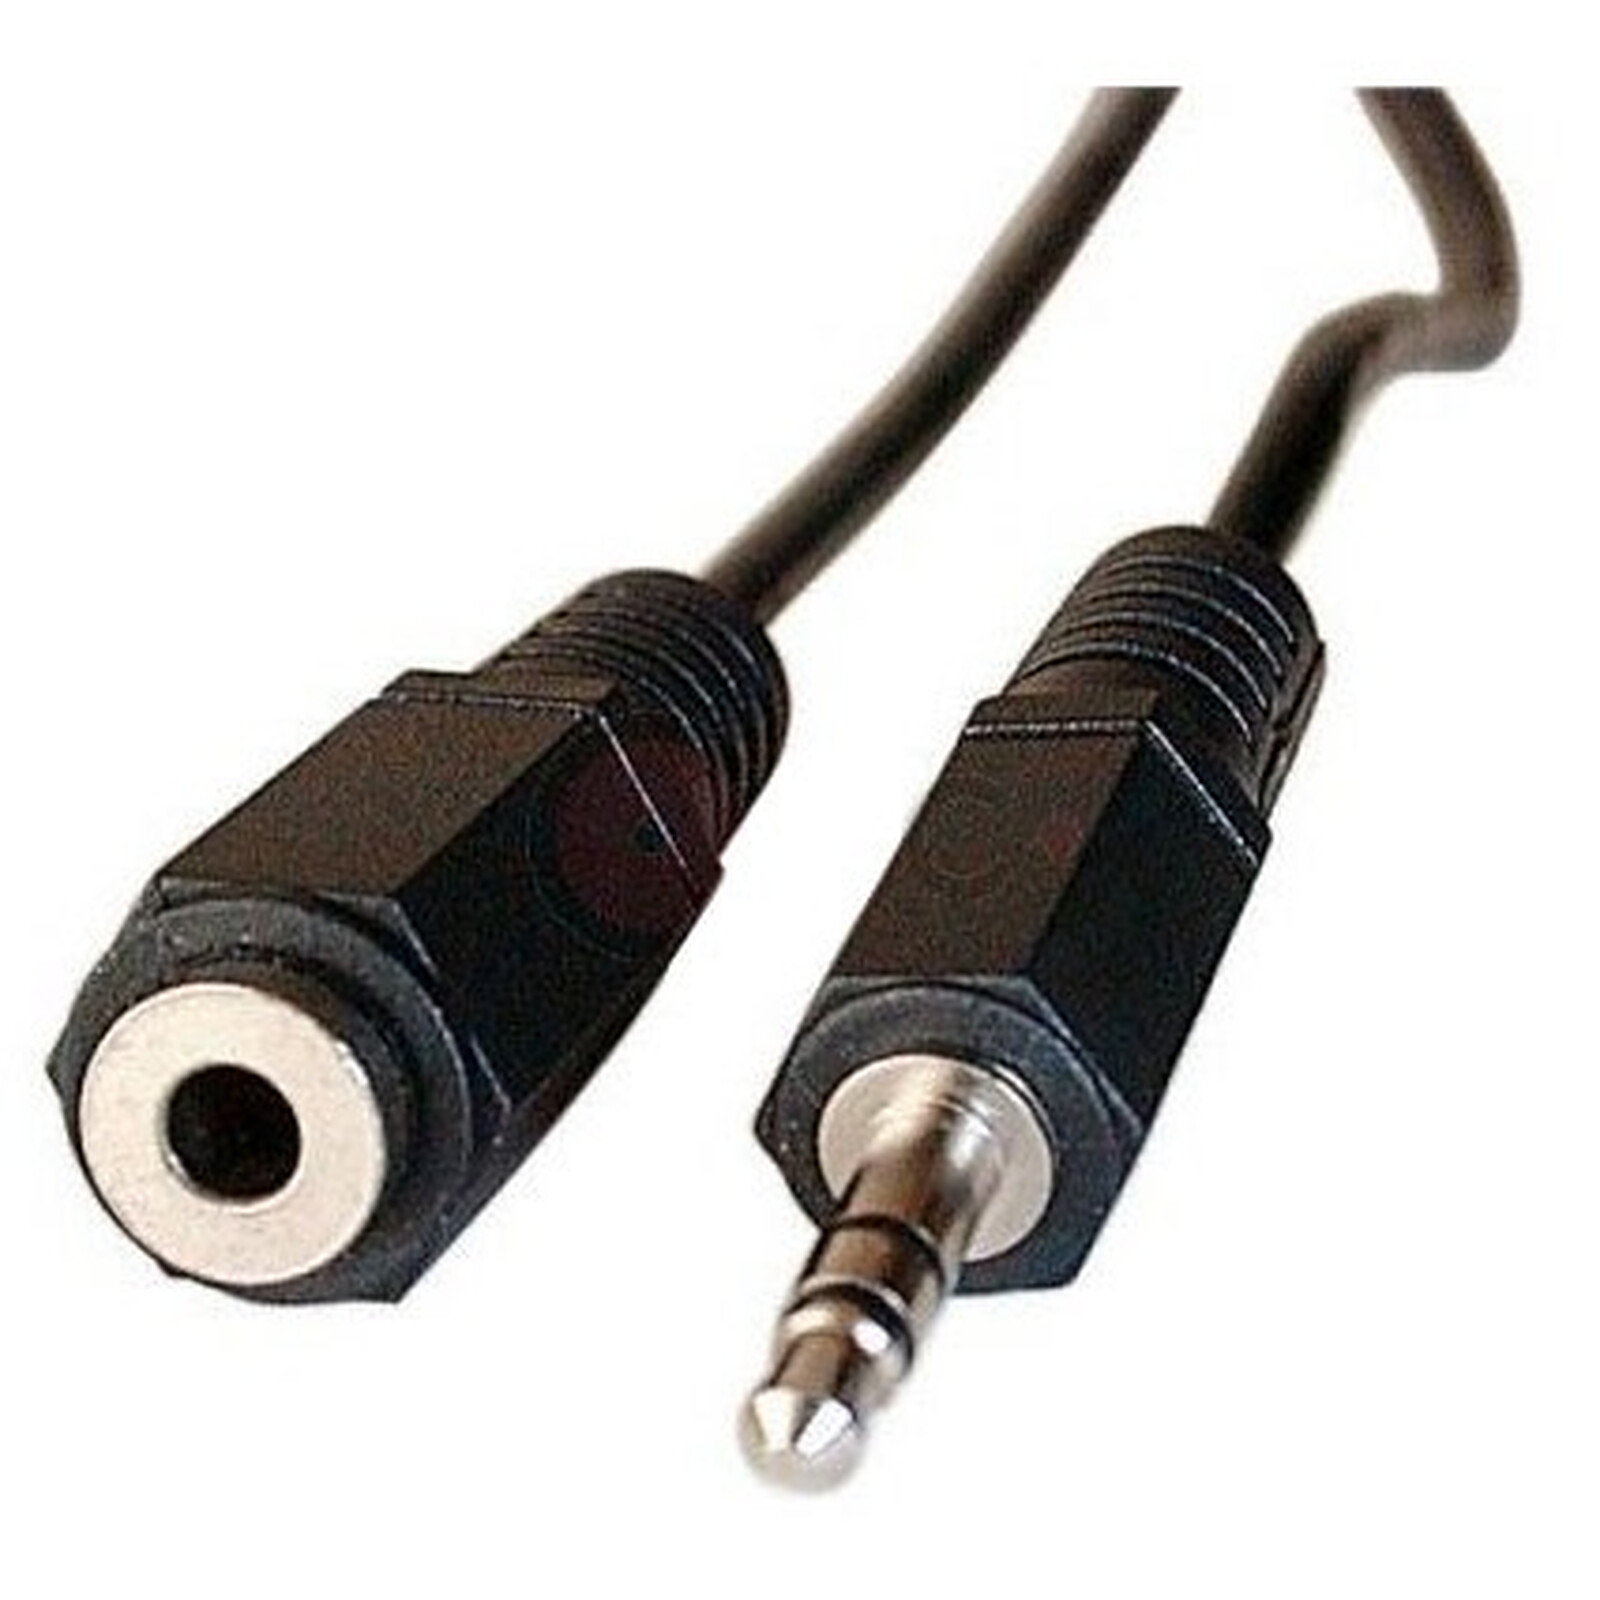 Cable audio Jack 3,5 mm macho - hembra